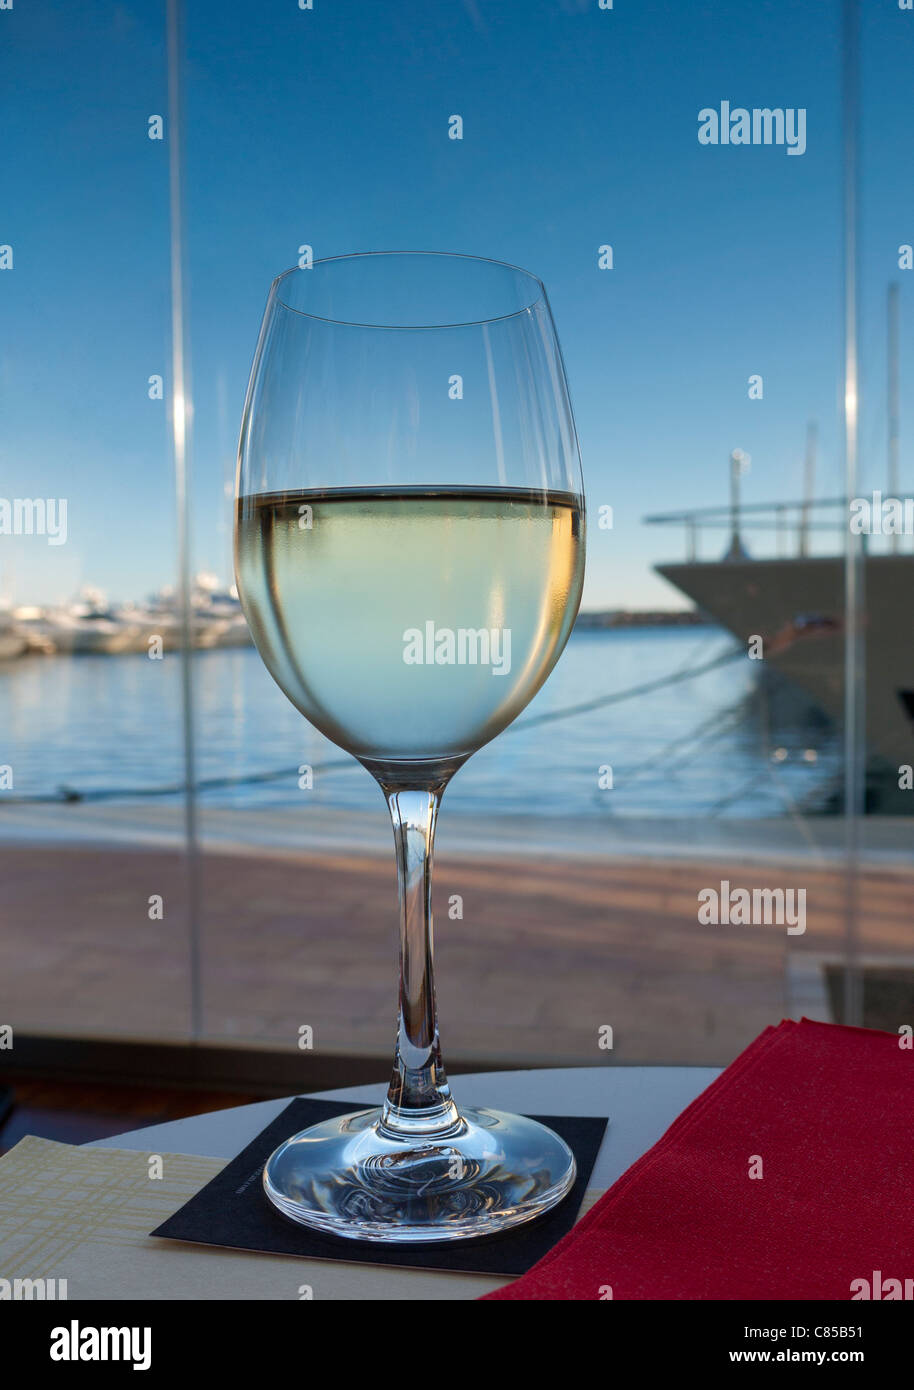 BAR Puerto Portals Majorque verre de vin blanc dans un bar restaurant au bord de l'eau dans le luxe marina resort Puerto Portals Majorque Espagne Banque D'Images